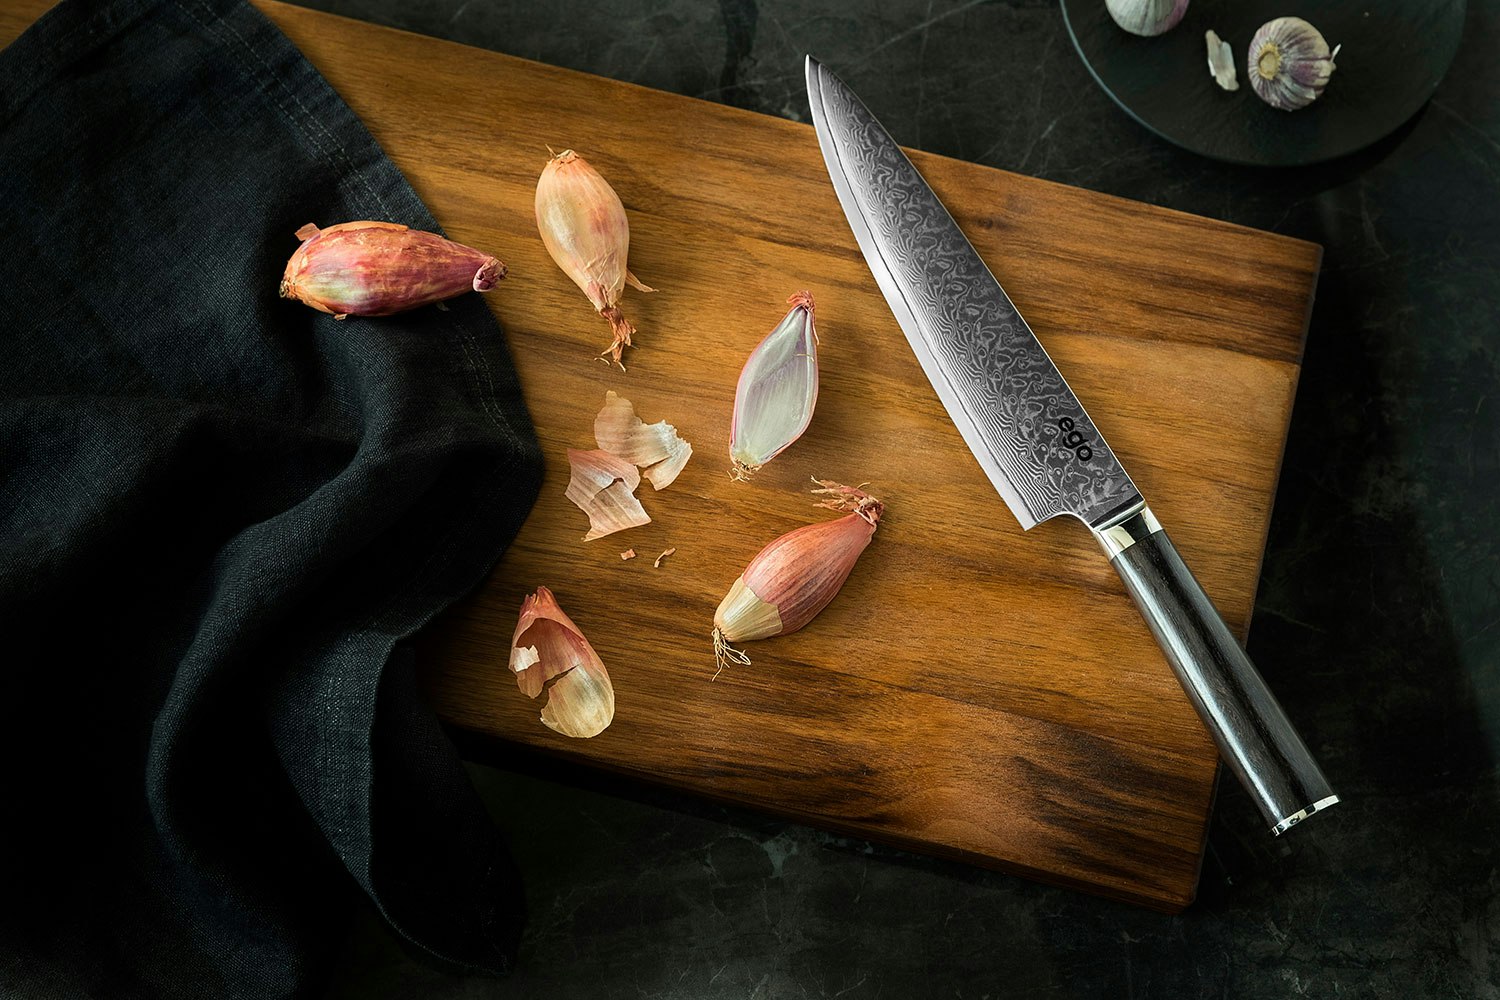 Buy Good VG-10 Steel Kitchen Knife Set Recommendations Australia